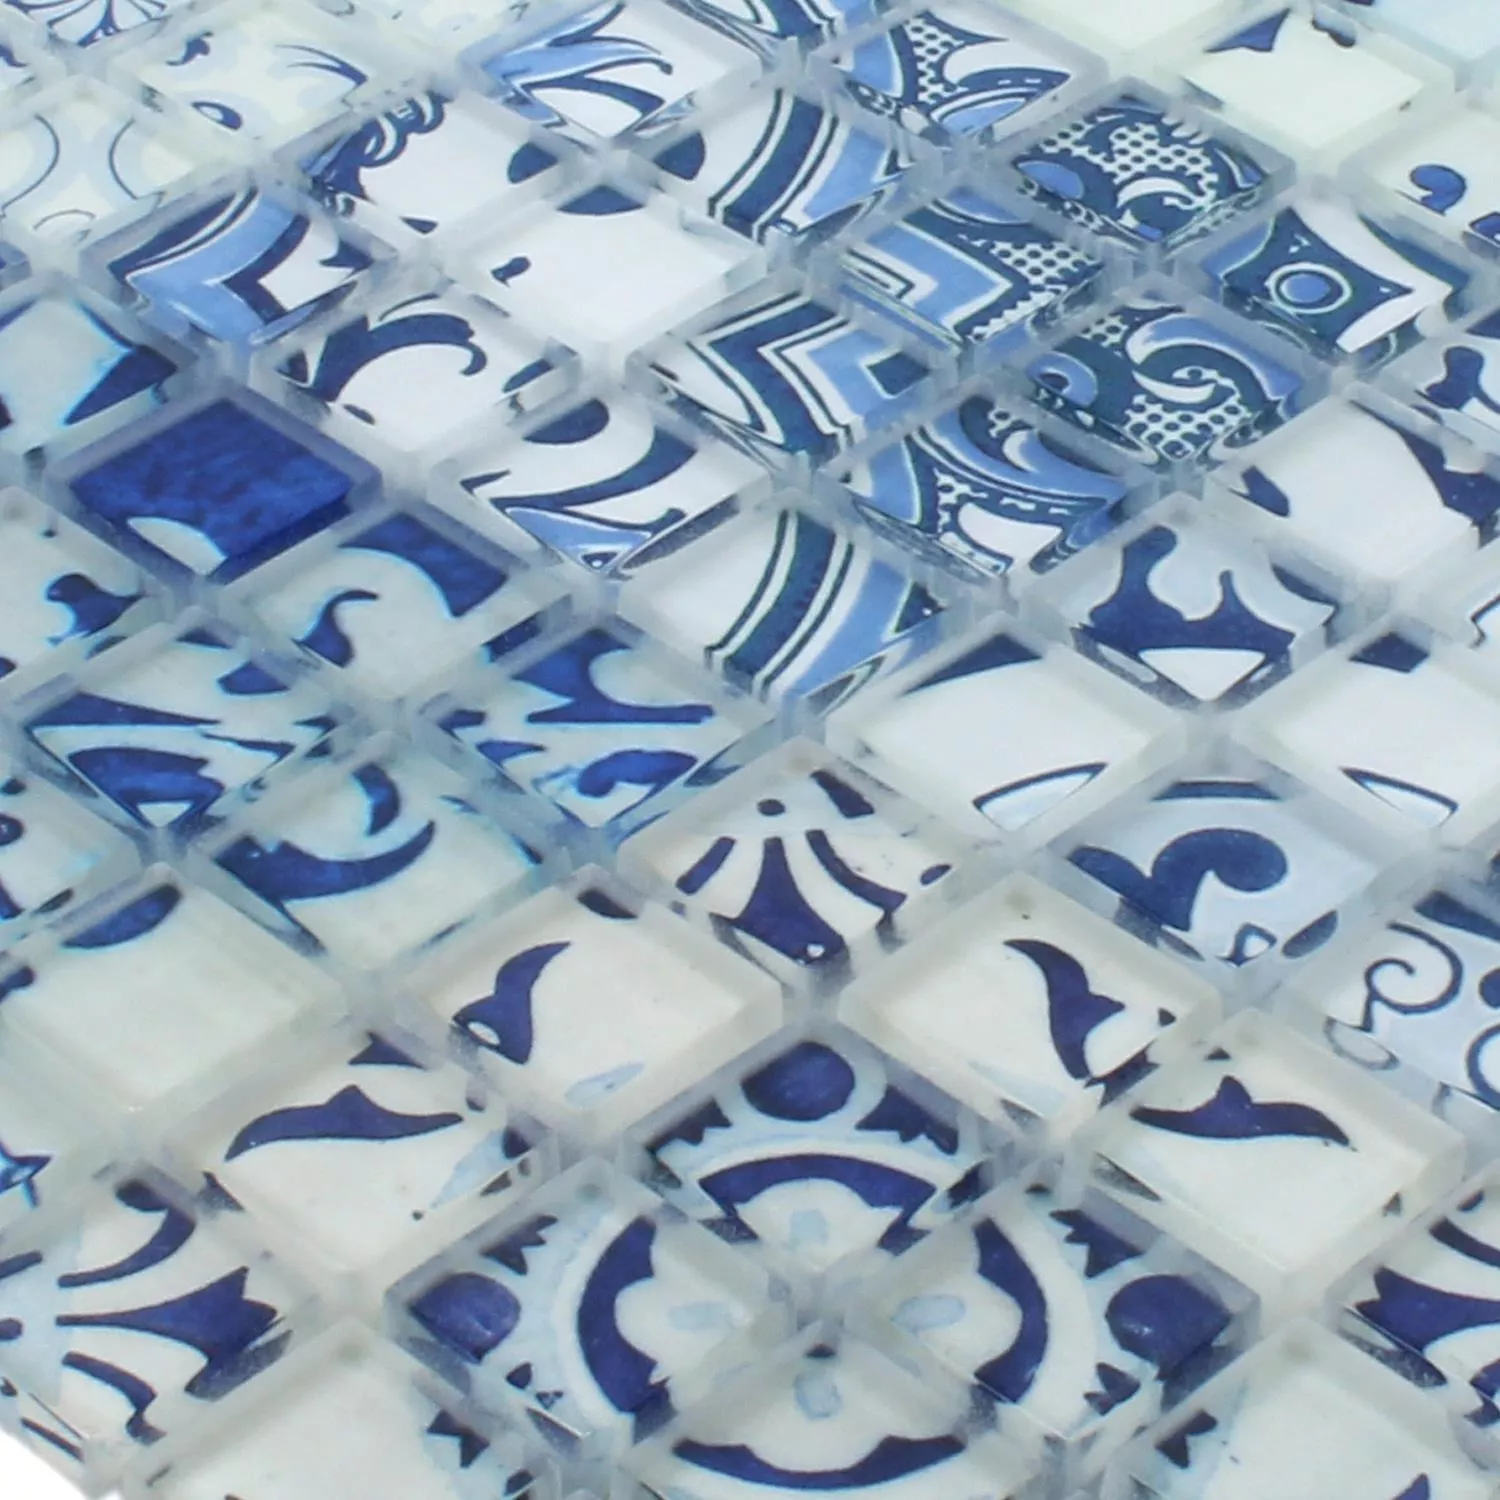 Sample Mosaic Tiles Glass Inspiration Grey